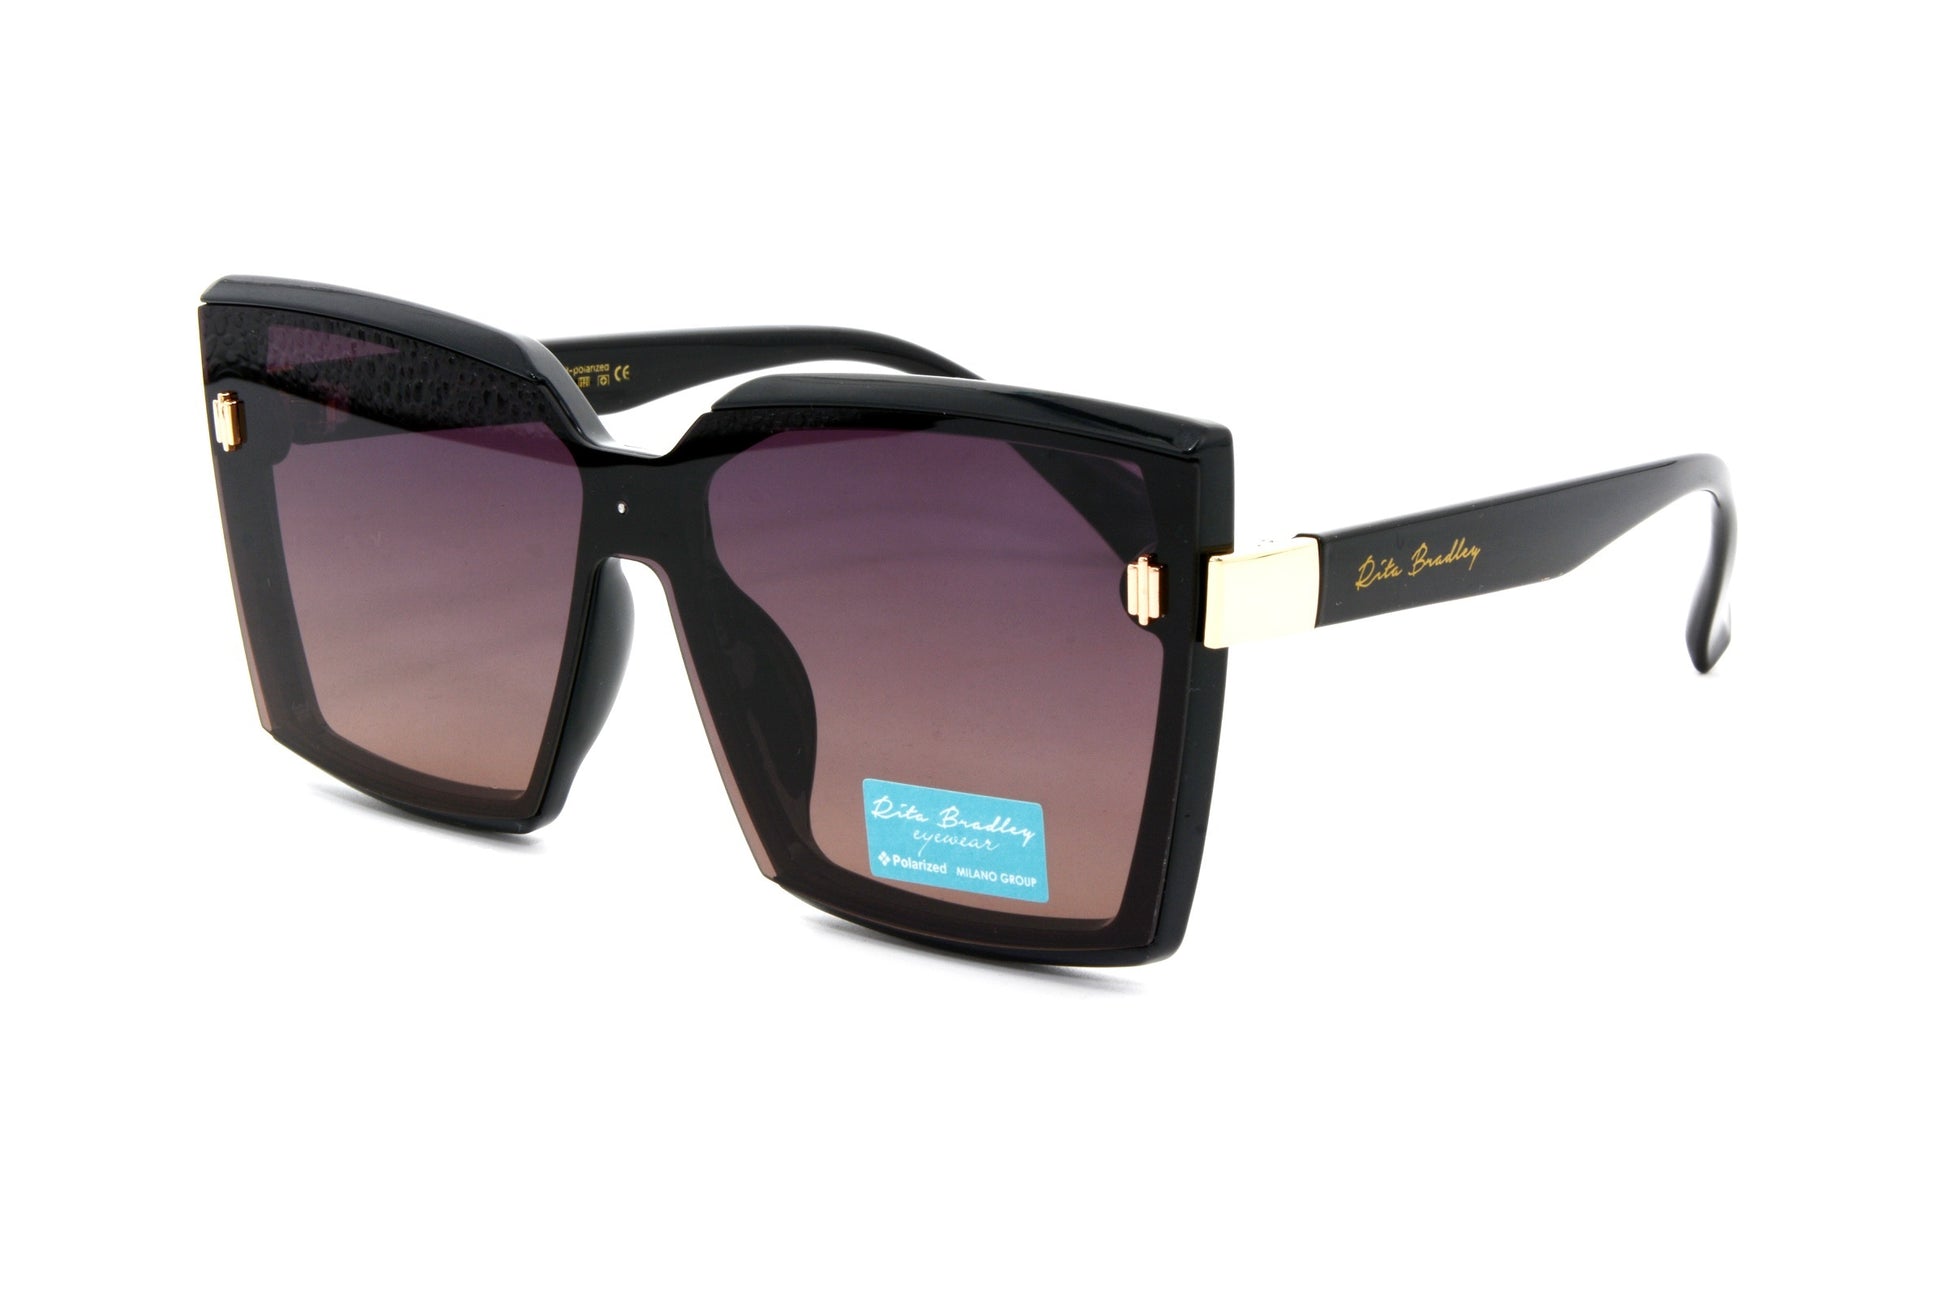 Rita Bradley sunglasses 723 C002